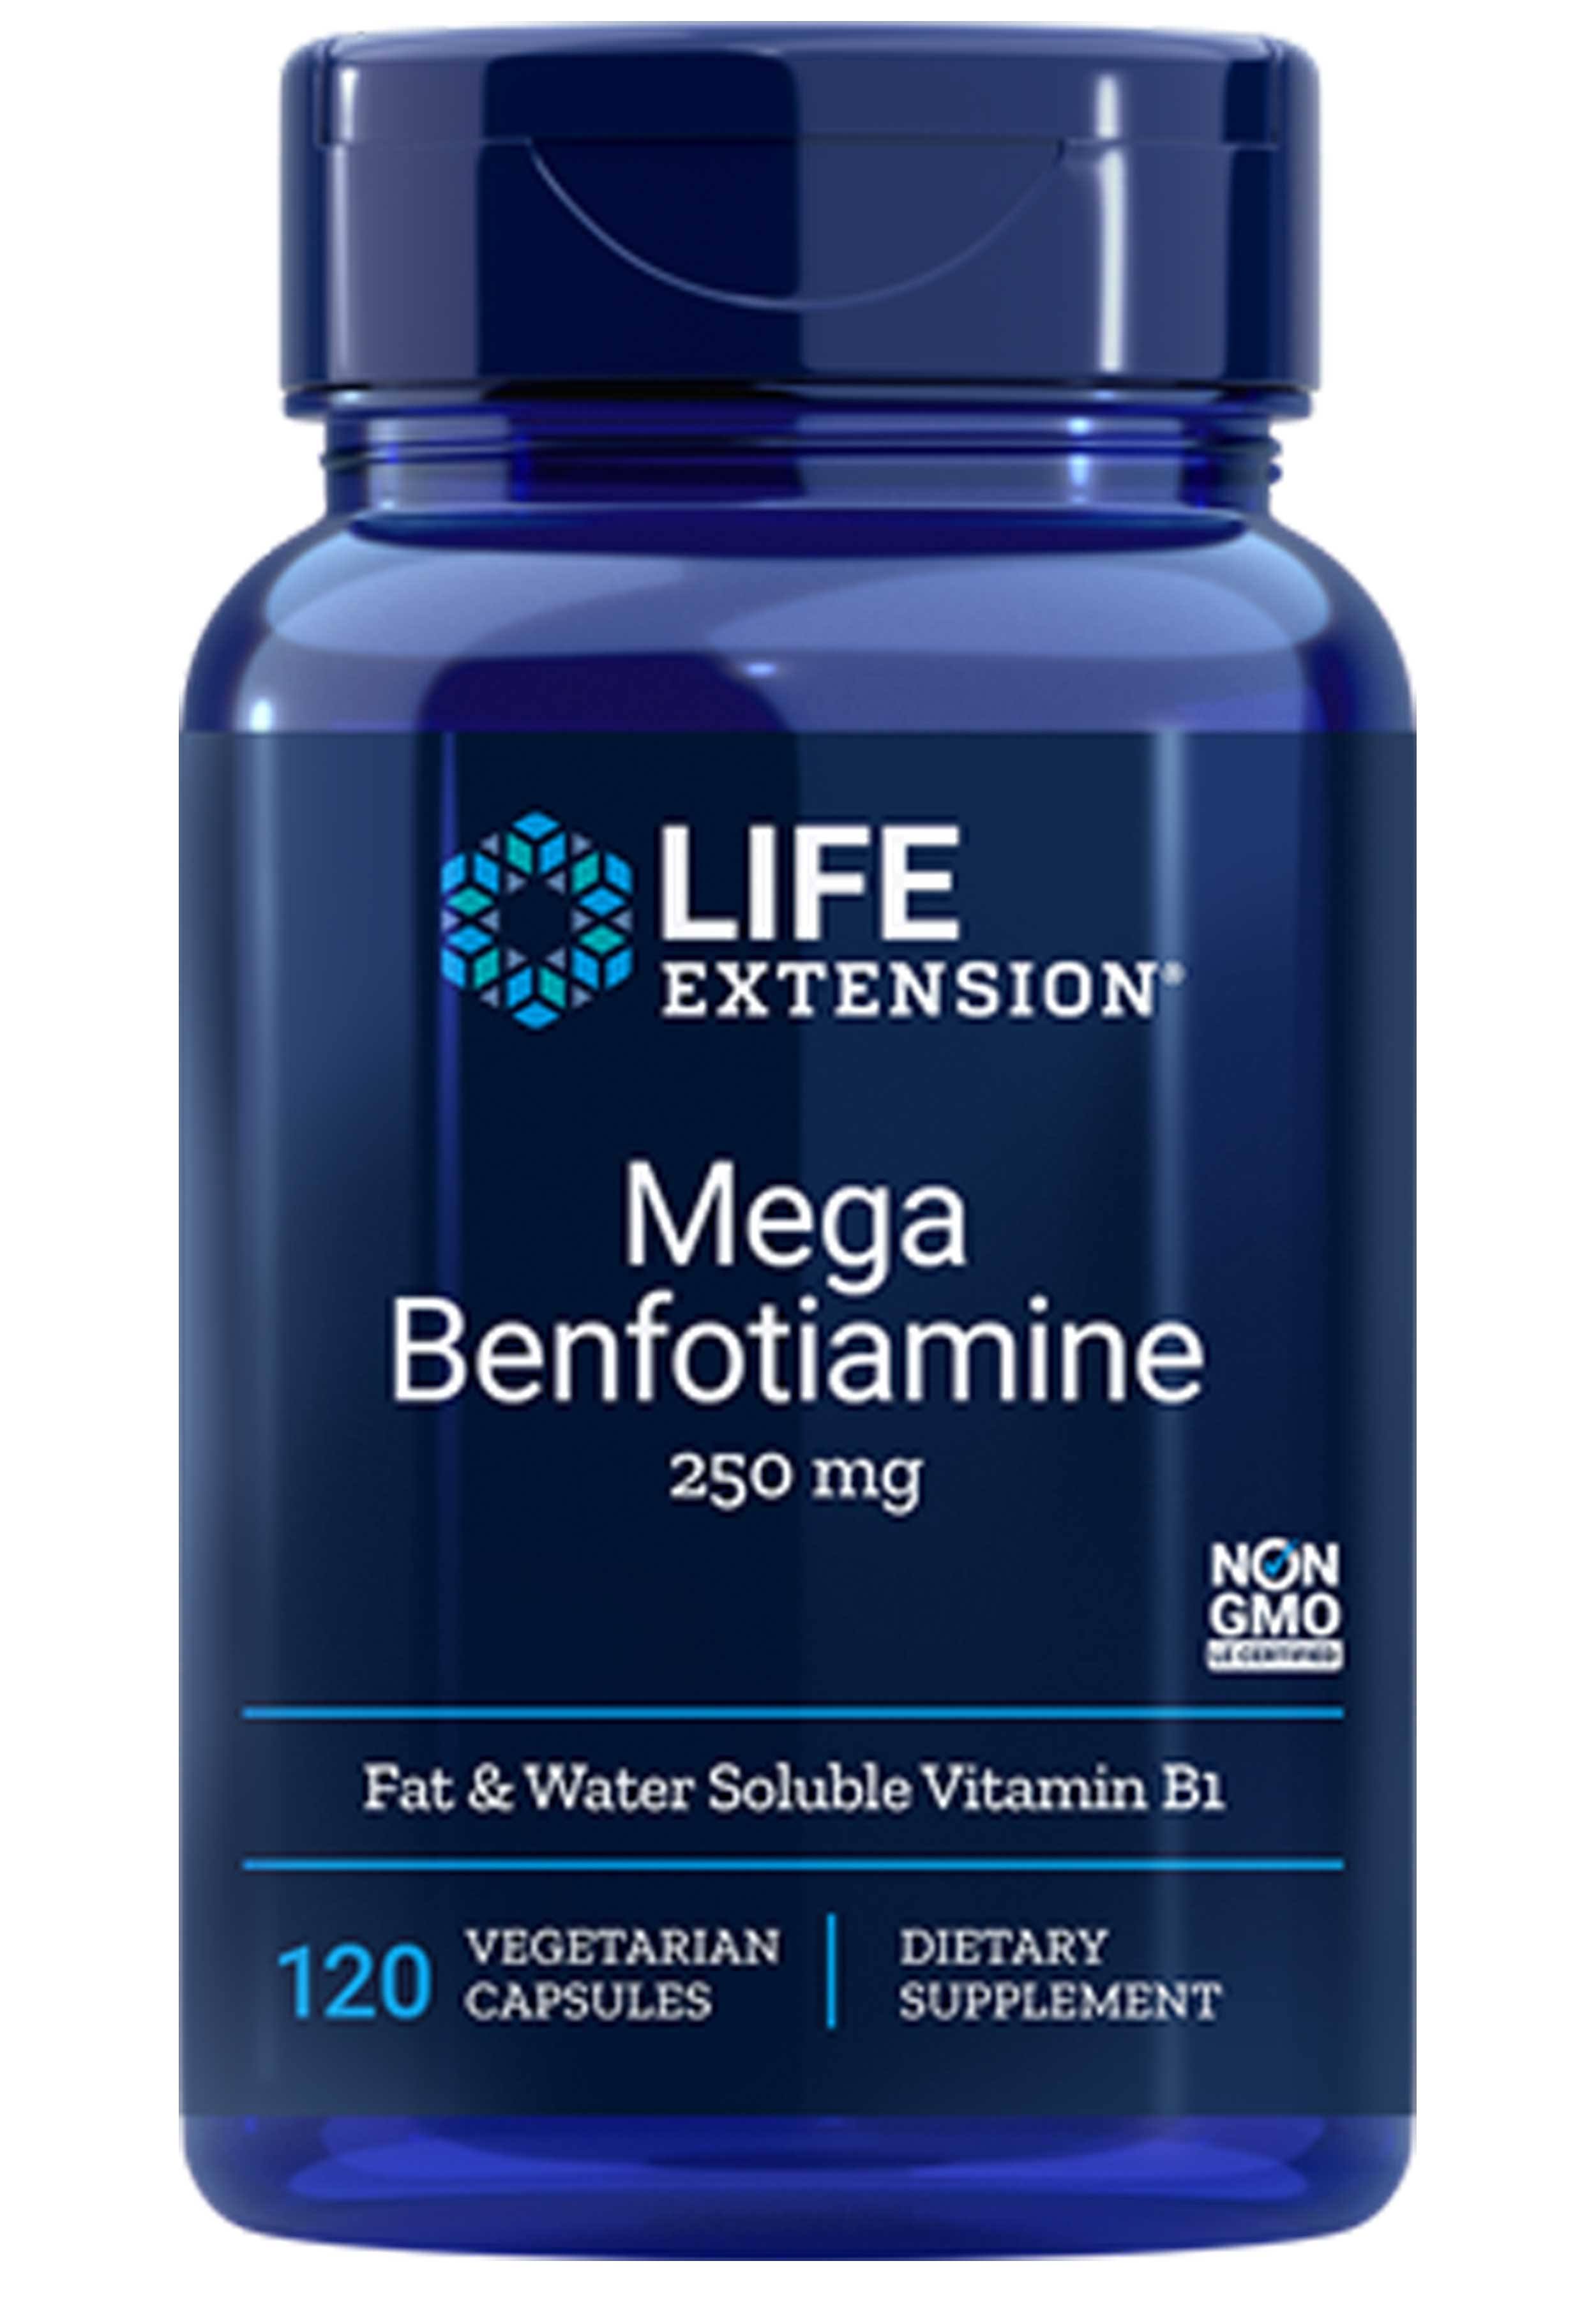 Life Extension Mega Benfotiamine 250 mg - 120 Capsules